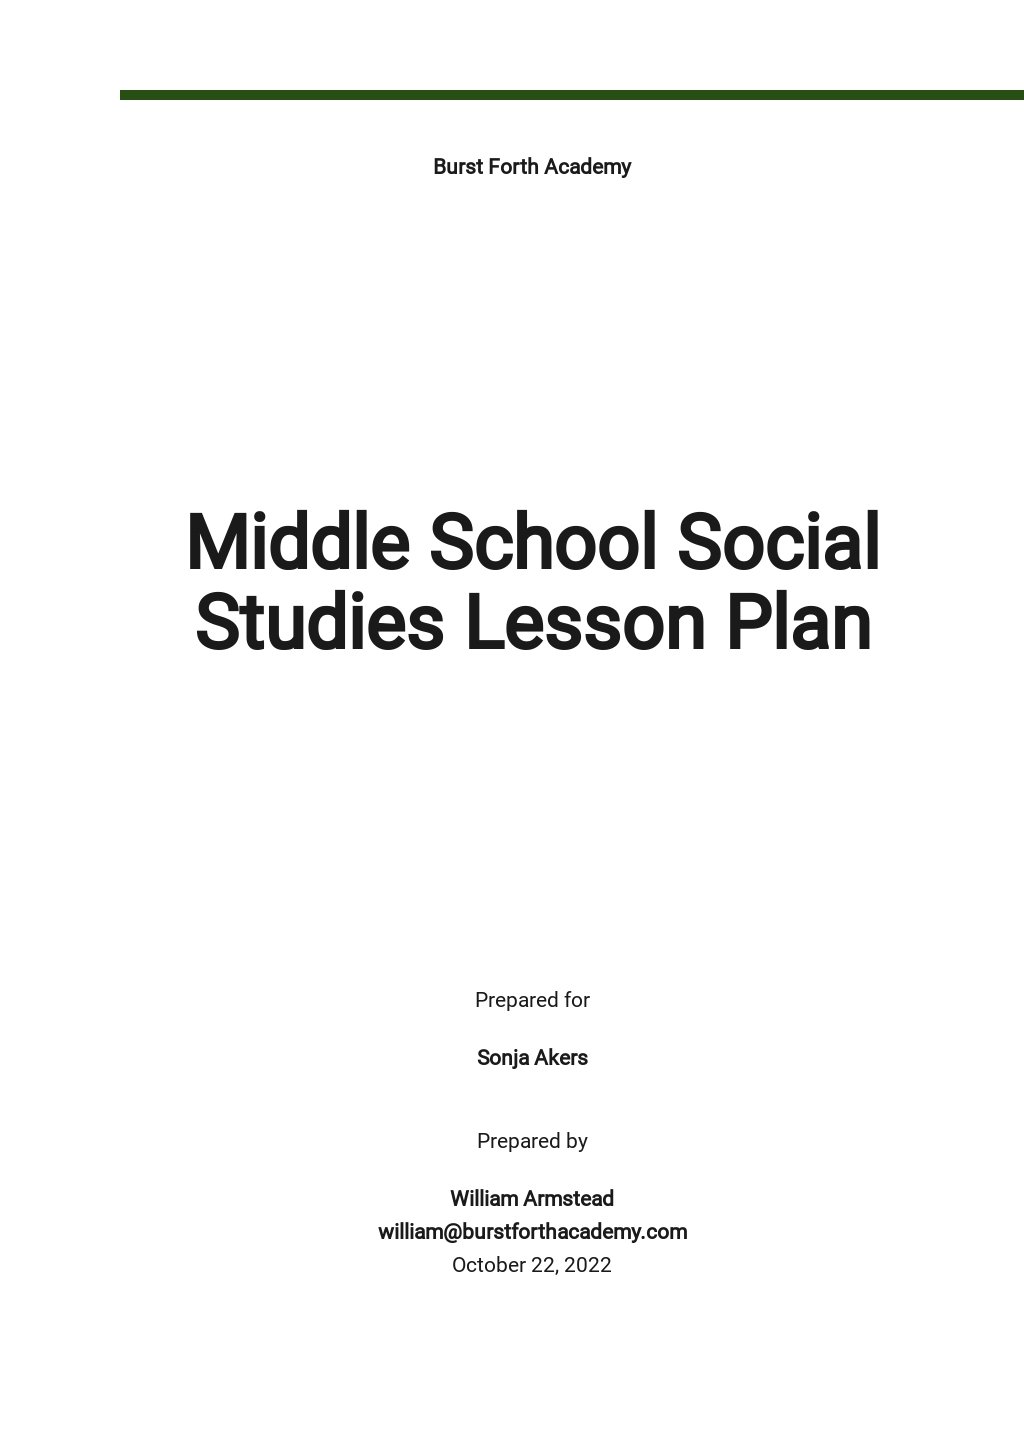 Middle School Social Studies Lesson Plan Template